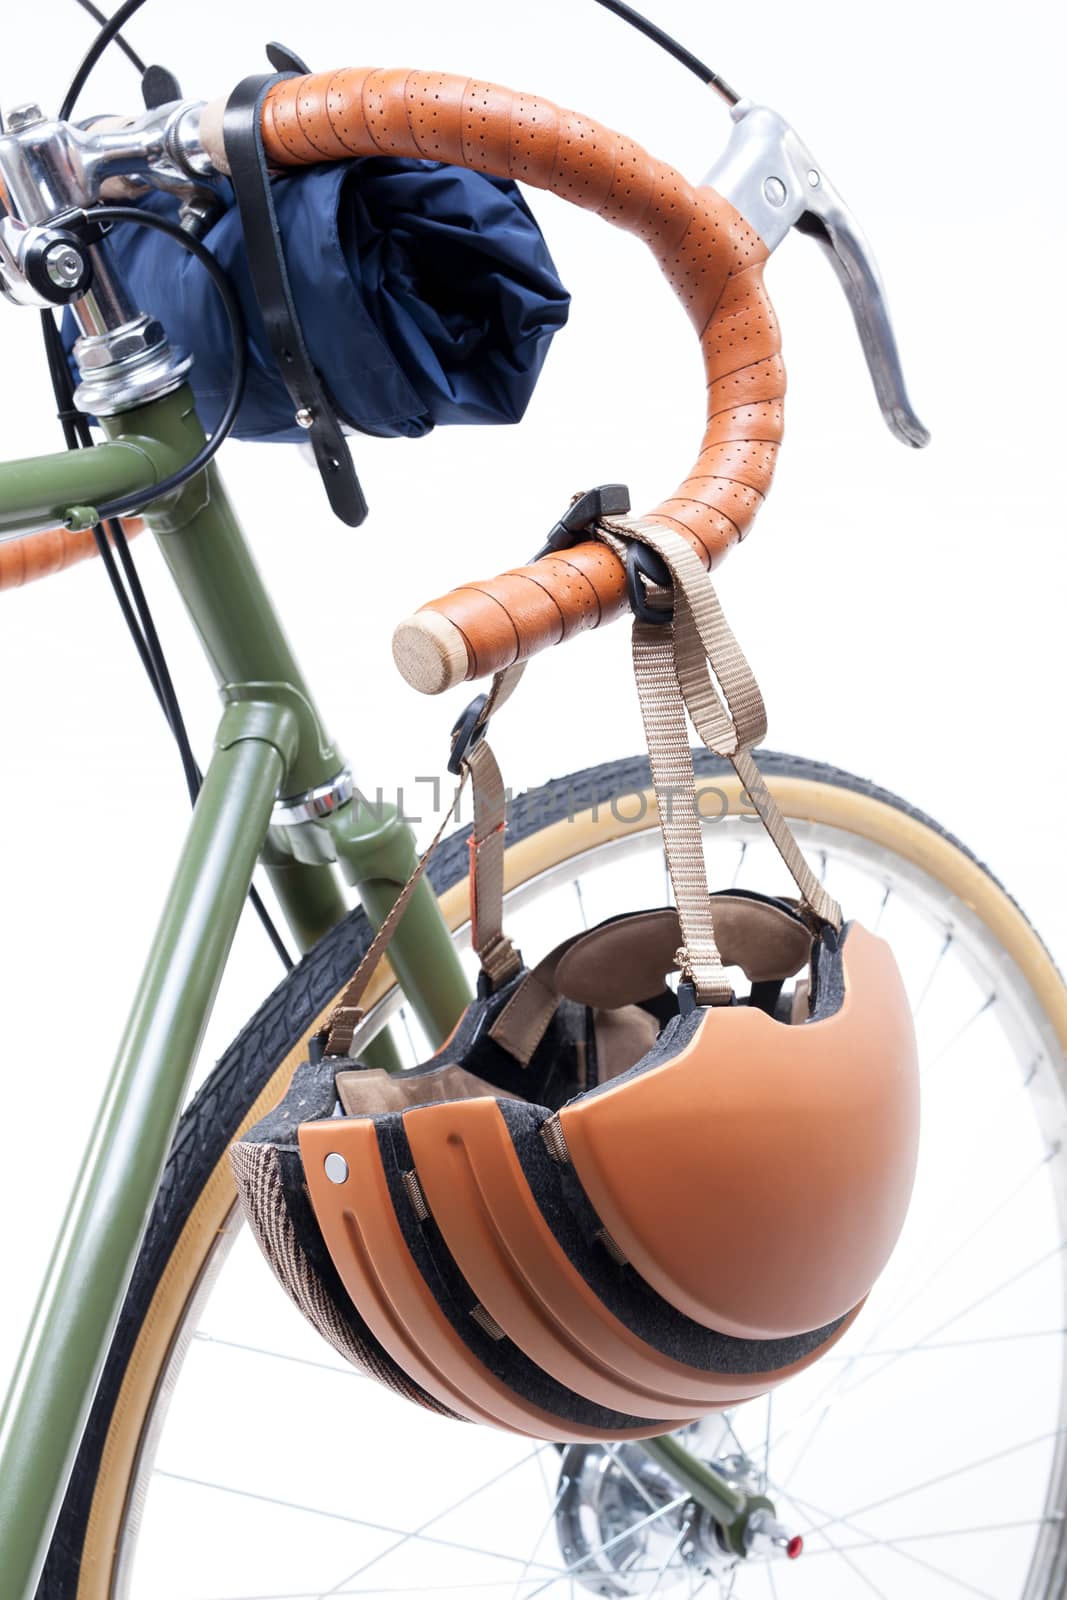 Vintage bicycle handlebar by igor_stramyk